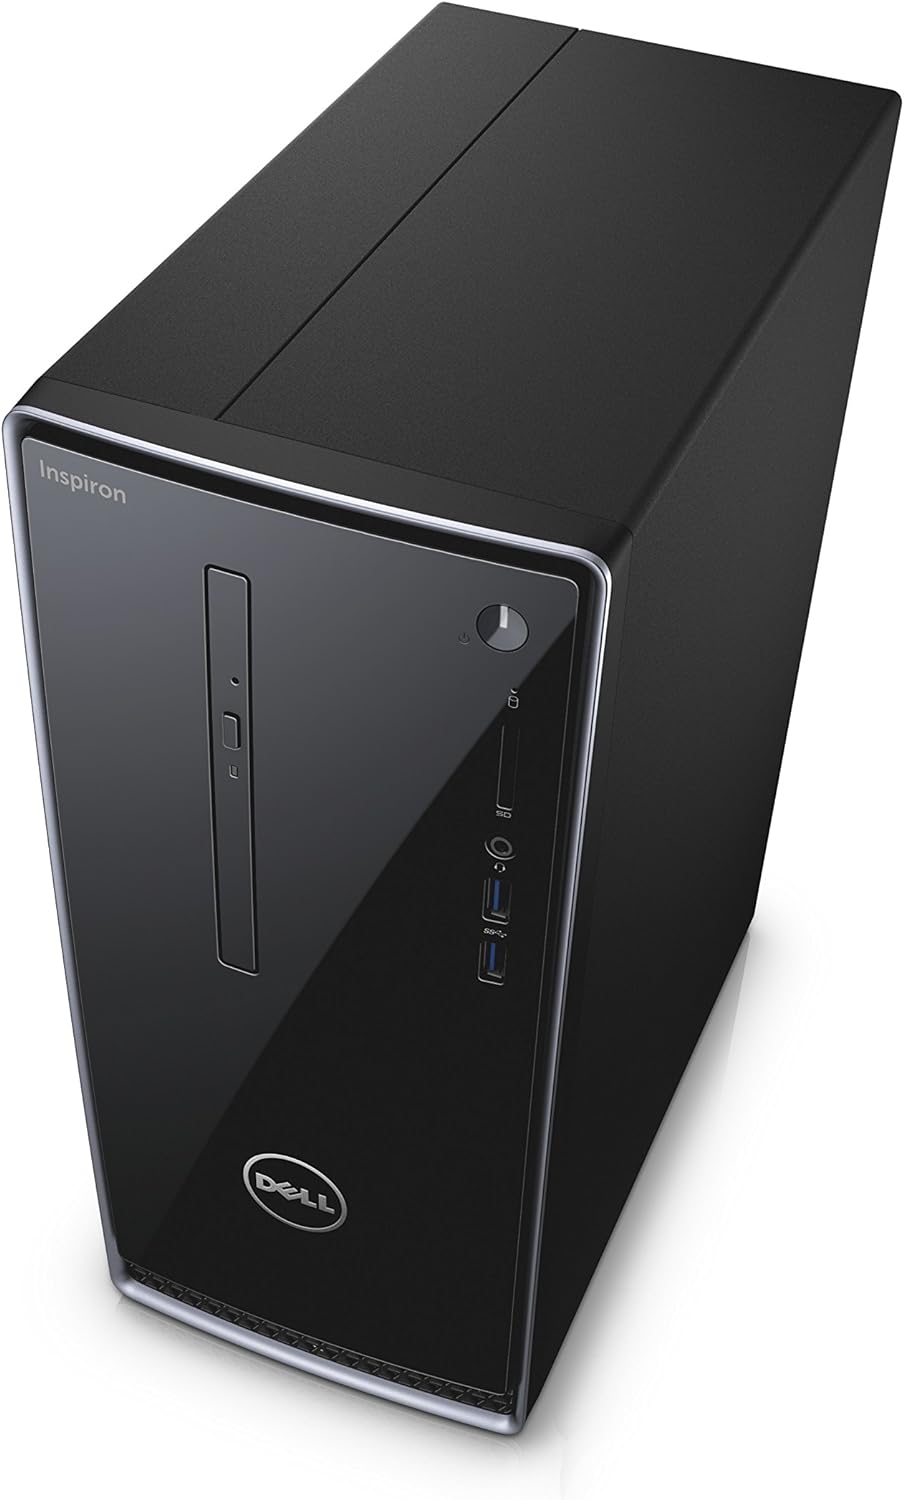 PC Desktop Dell Inspiron 3650 (i5-6ta 8GB 500GB) Reacondicionado Grado A